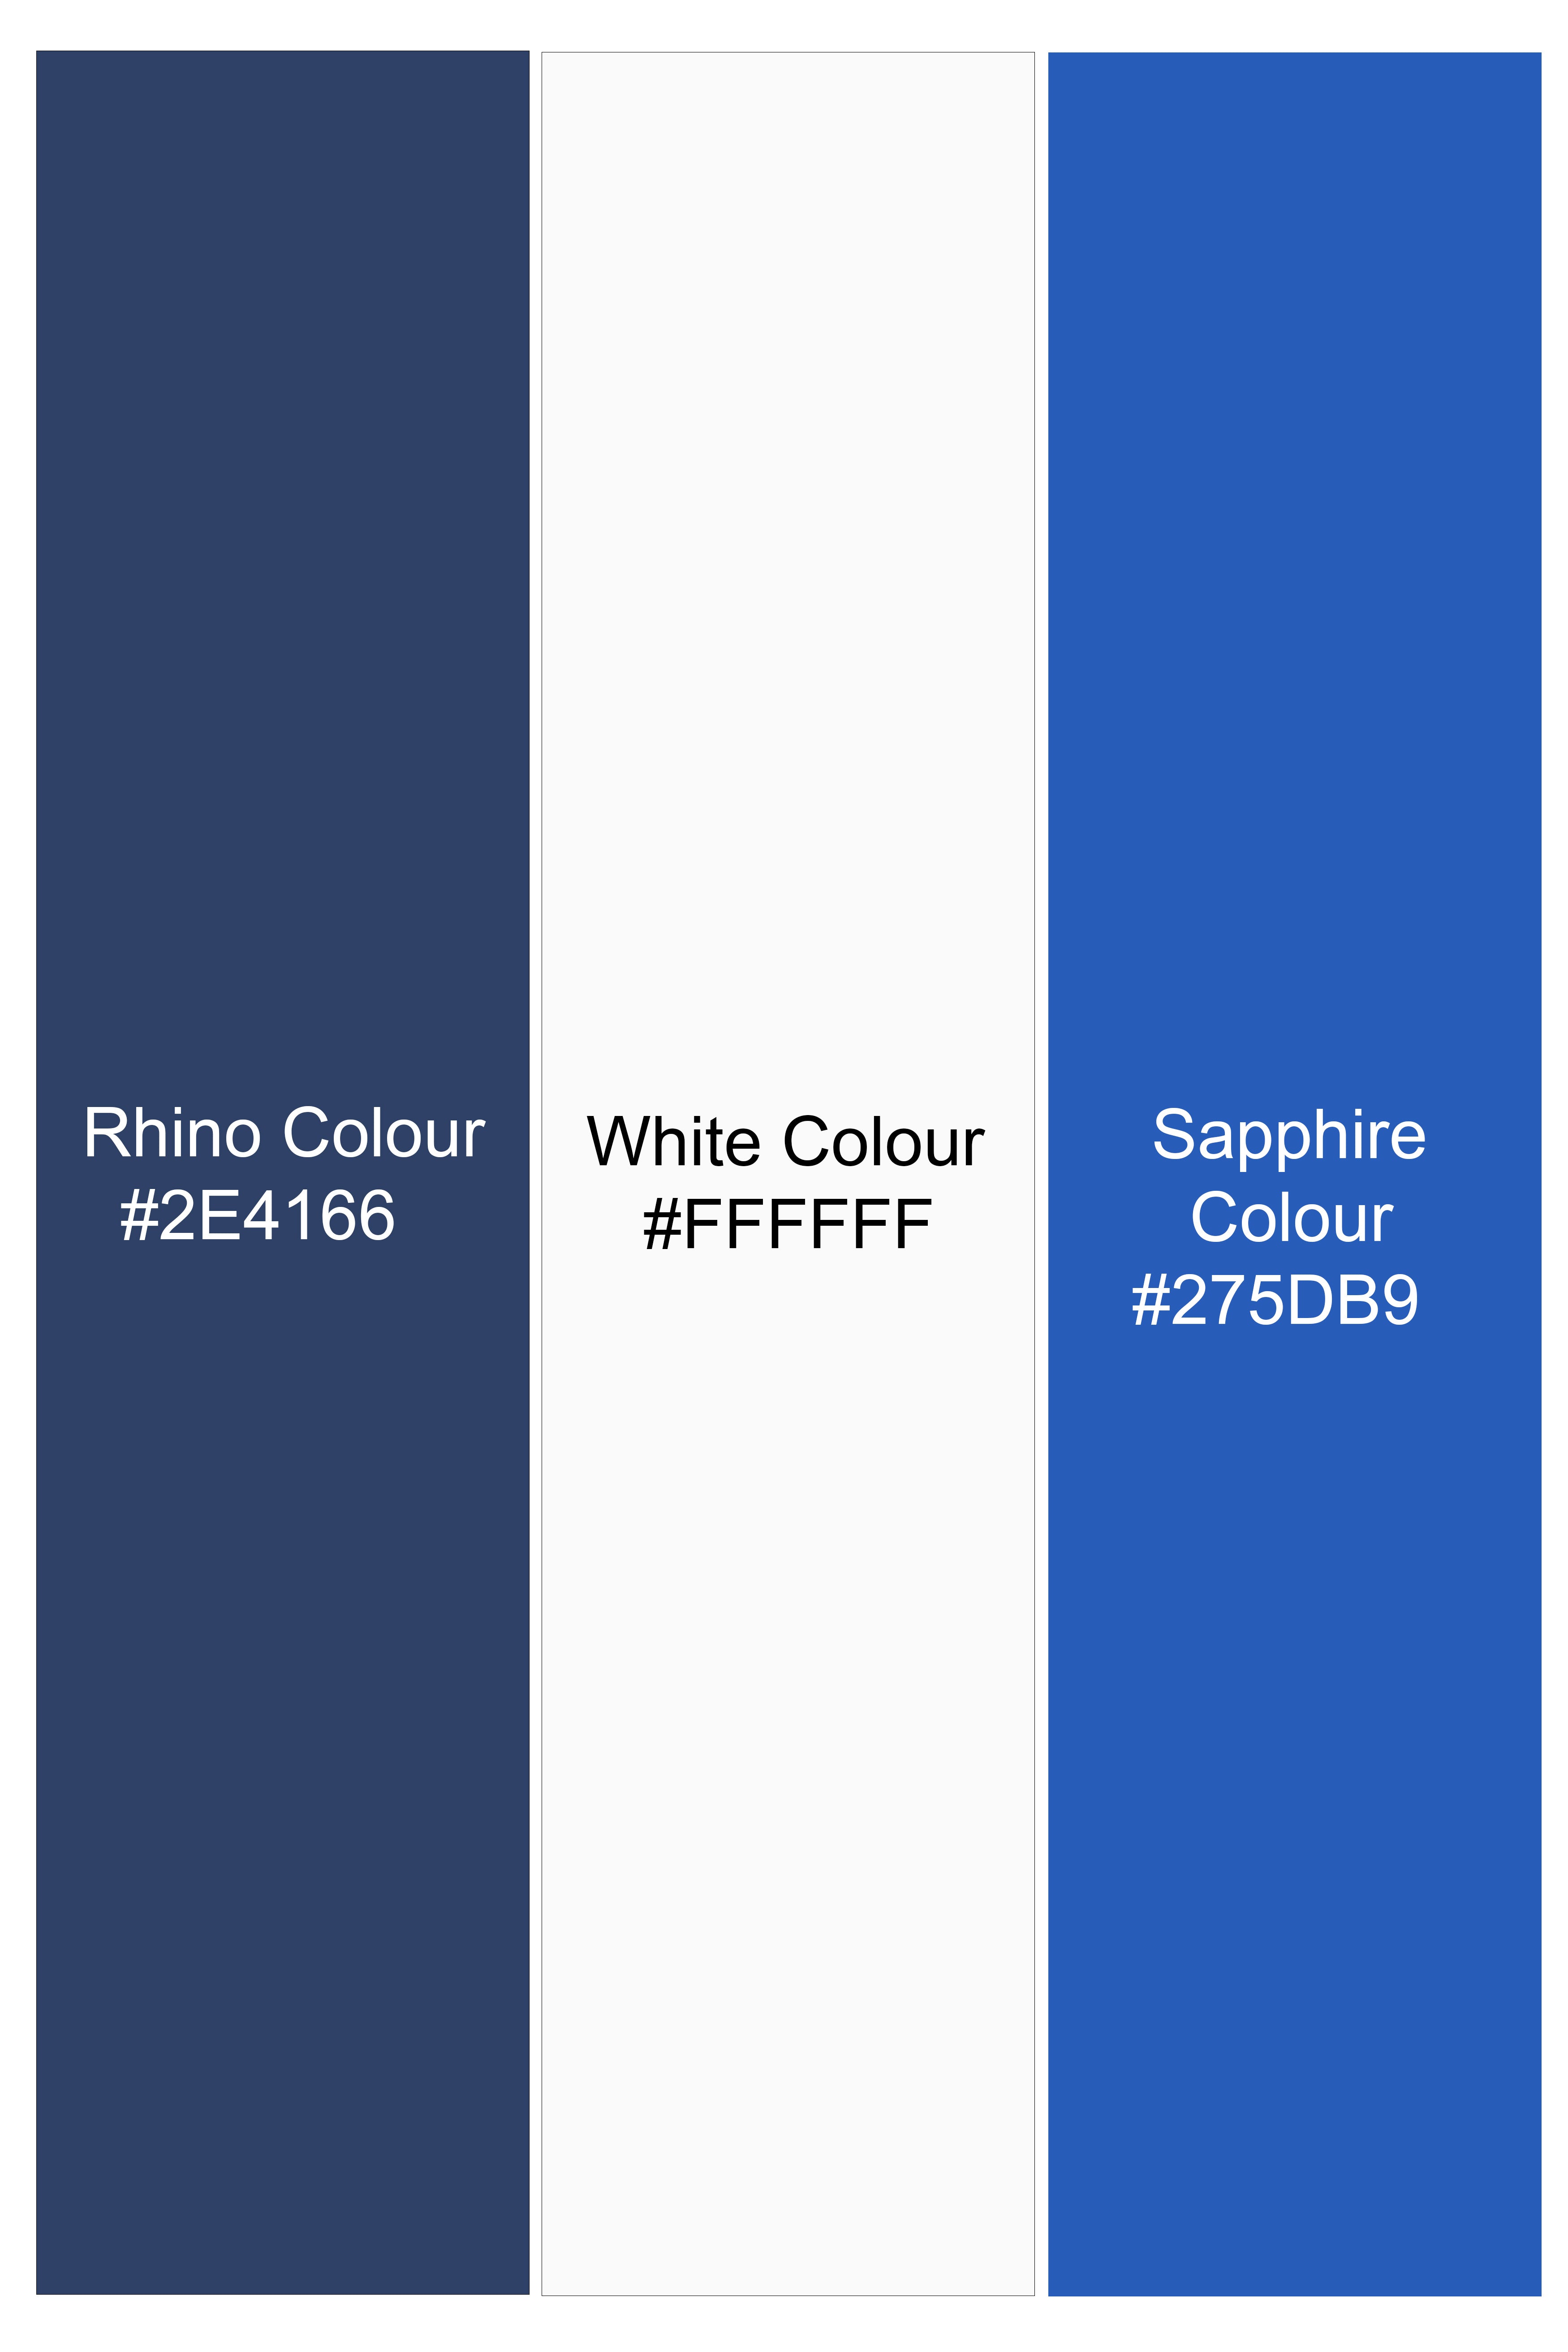 Rhino Blue Windowpane Plaid Flannel Cotton Shirt